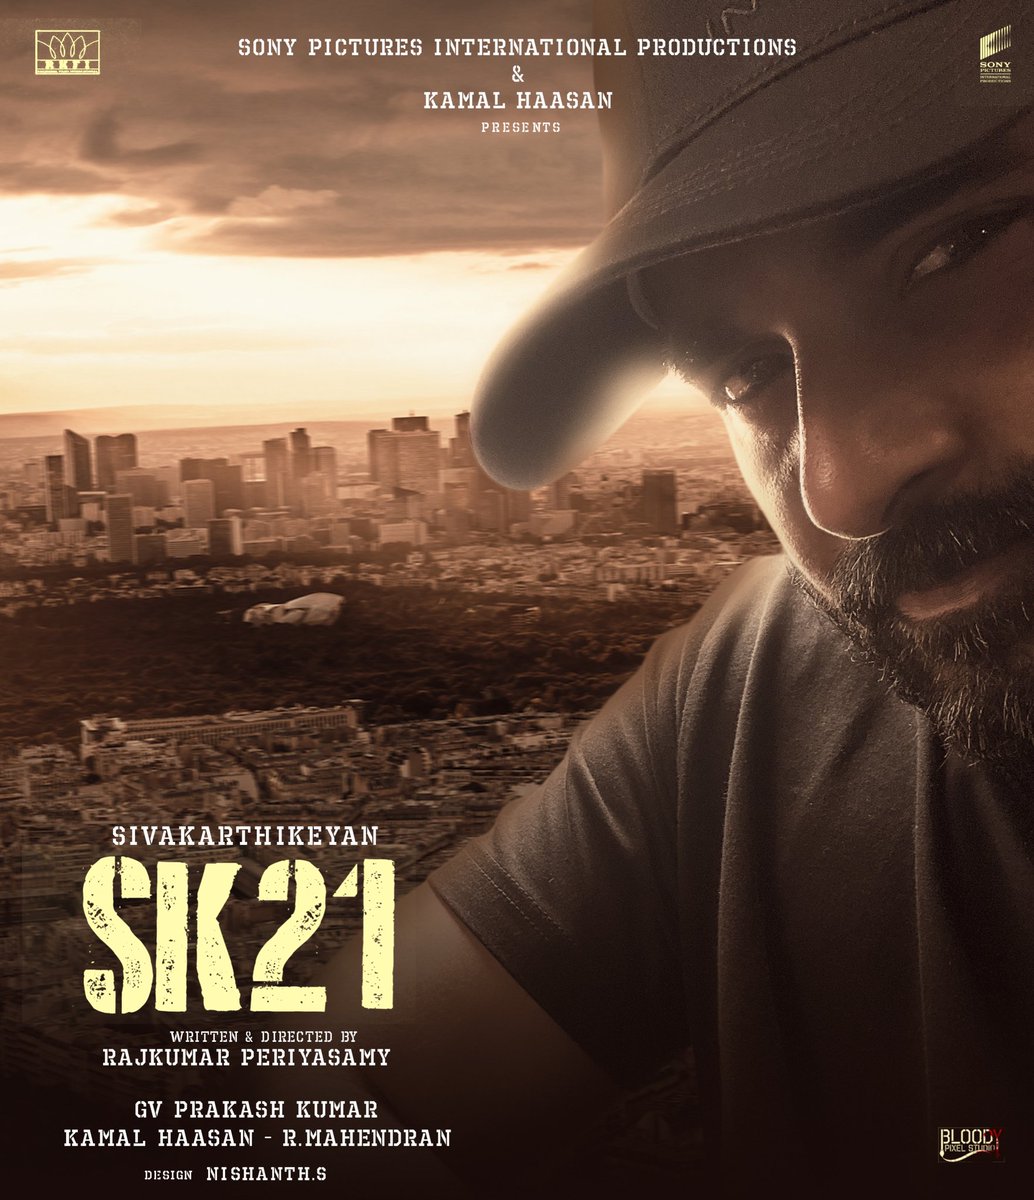 #SK21 Shoot Begins Soon 💥

@Siva_Kartikeyan @Sai_Pallavi92 
#RajkumarPeriyasamy @gvprakash @RKFI @ikamalhaasan @sonypicsfilmsin 

#SivaKartikeyan21 #Production51